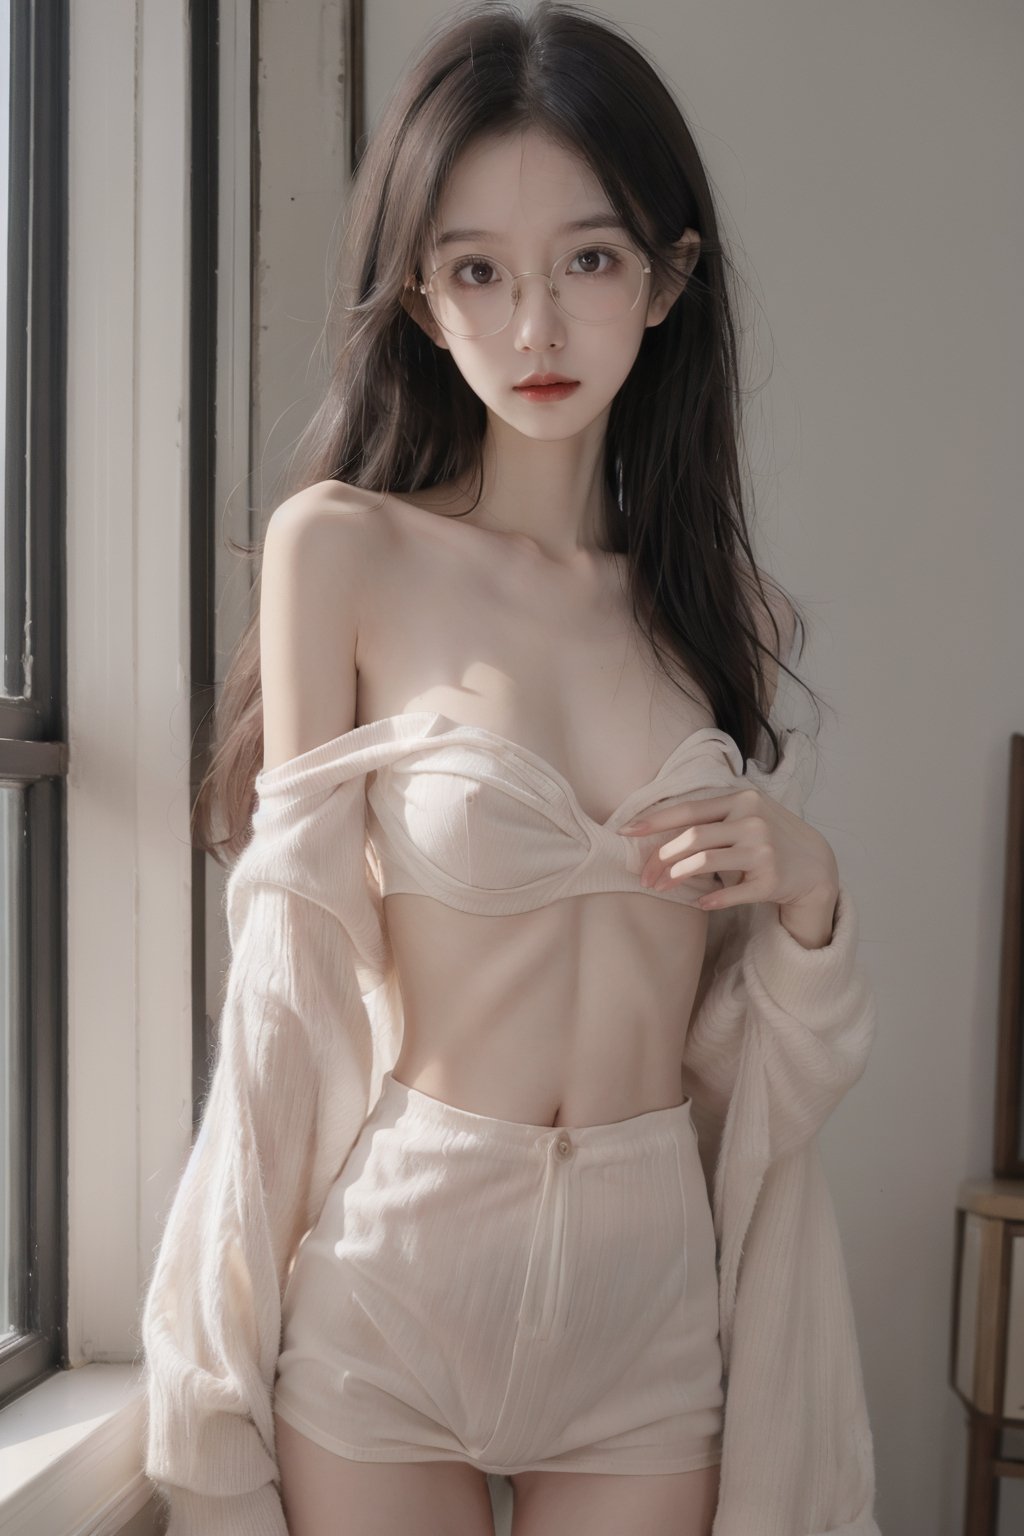 Big Female Breasts in a White Bra. Beautiful Body. Underwear or